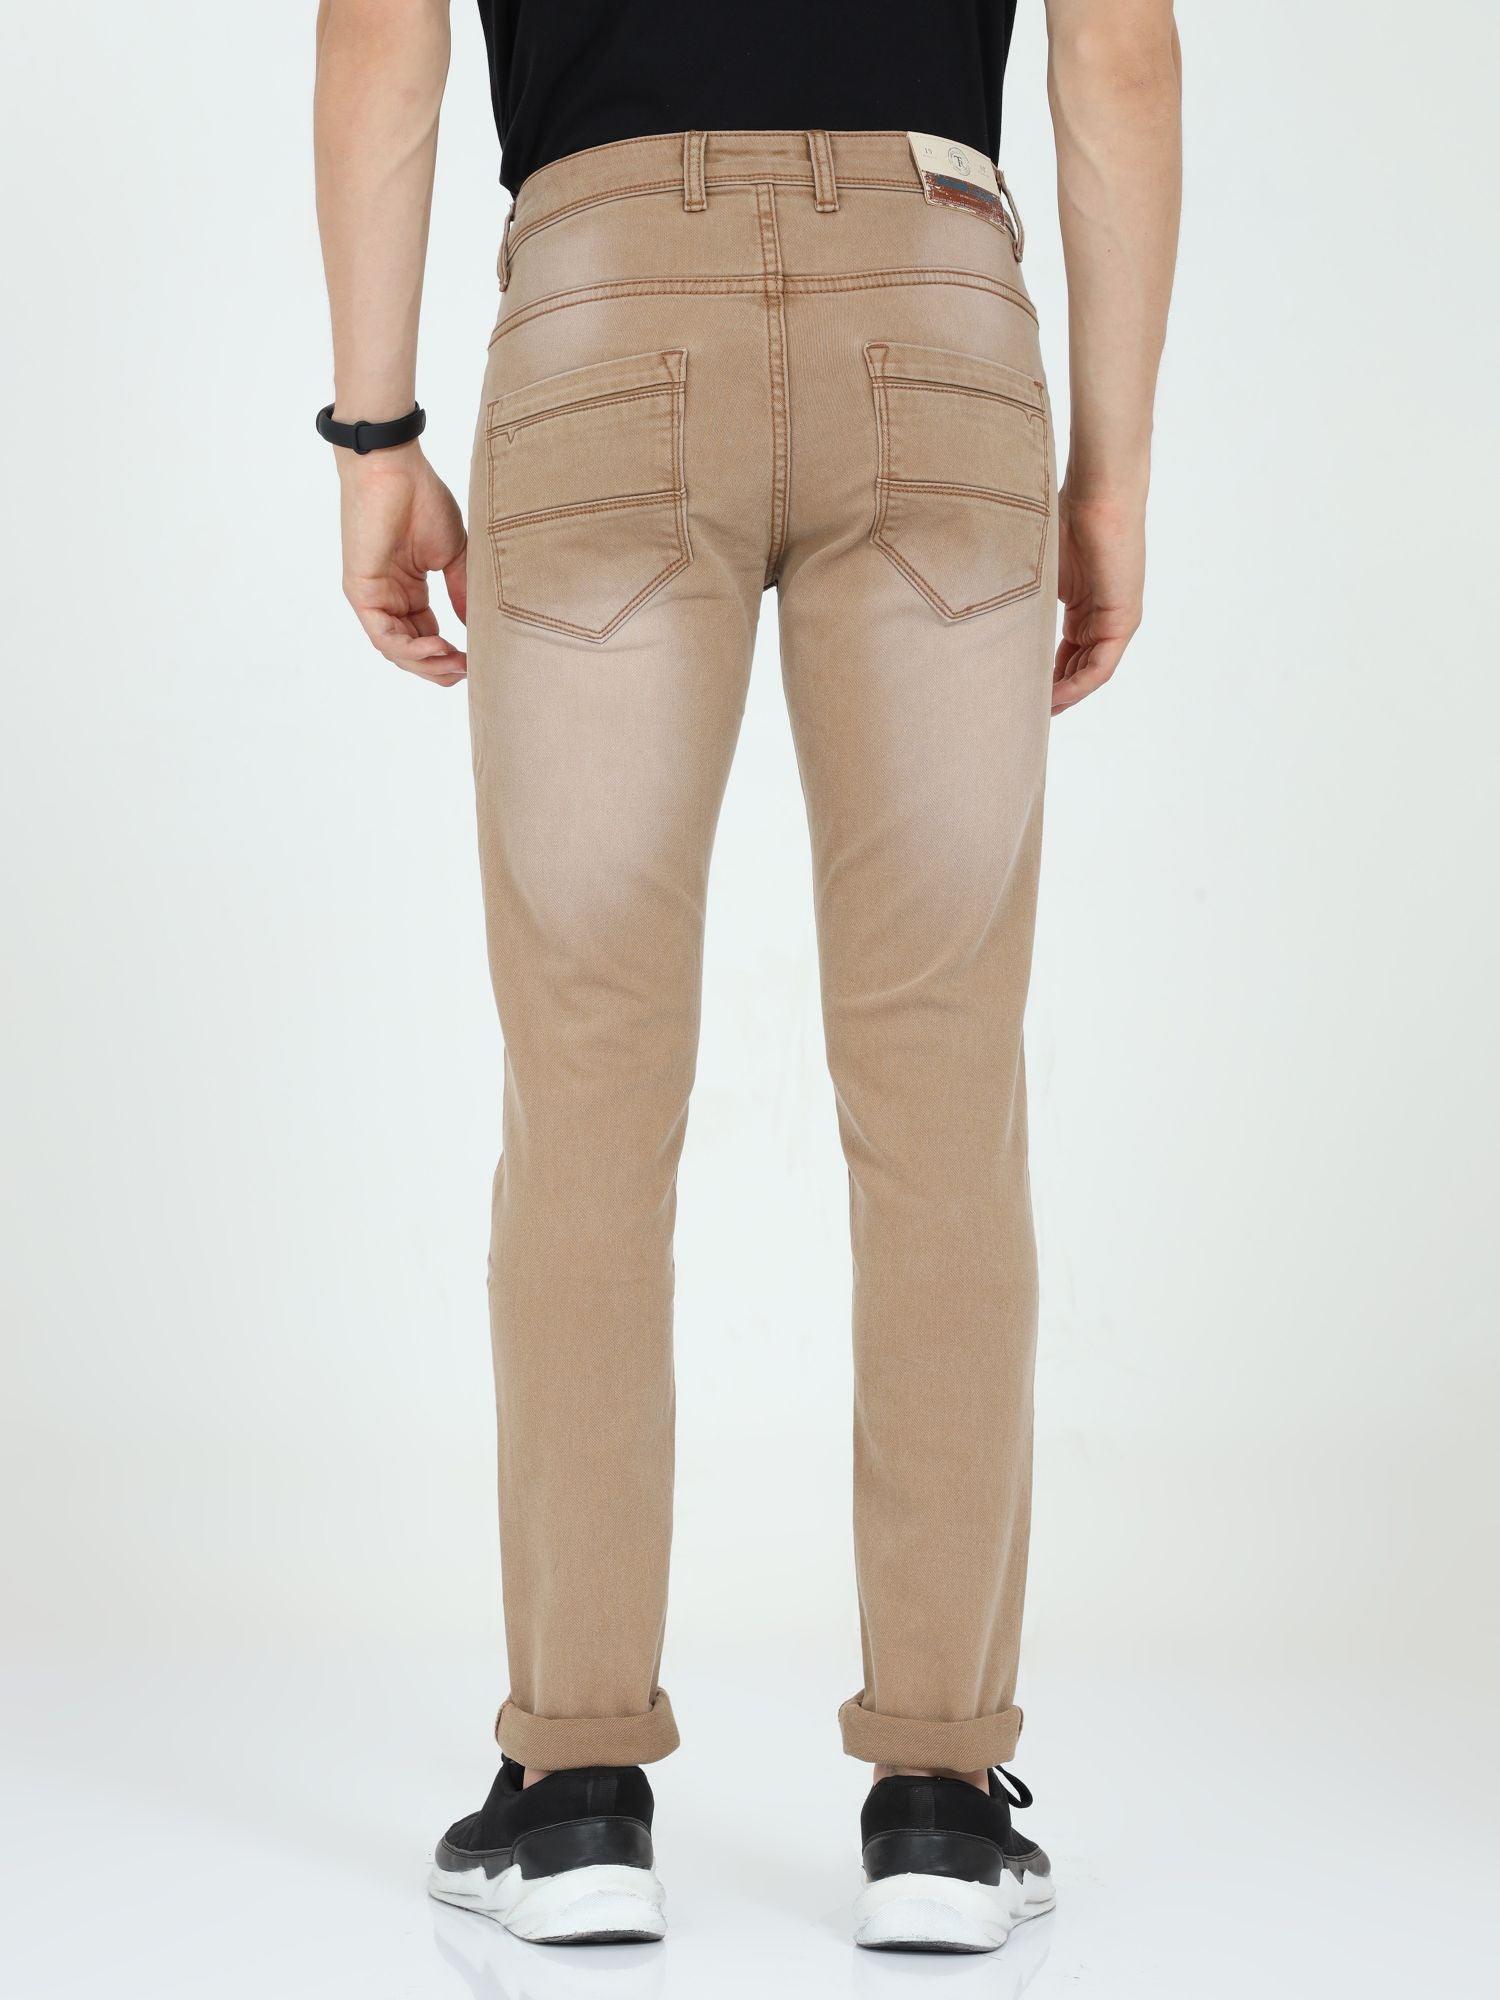 Men's Slim Fit Jeans - Khaki - Triggerjeans